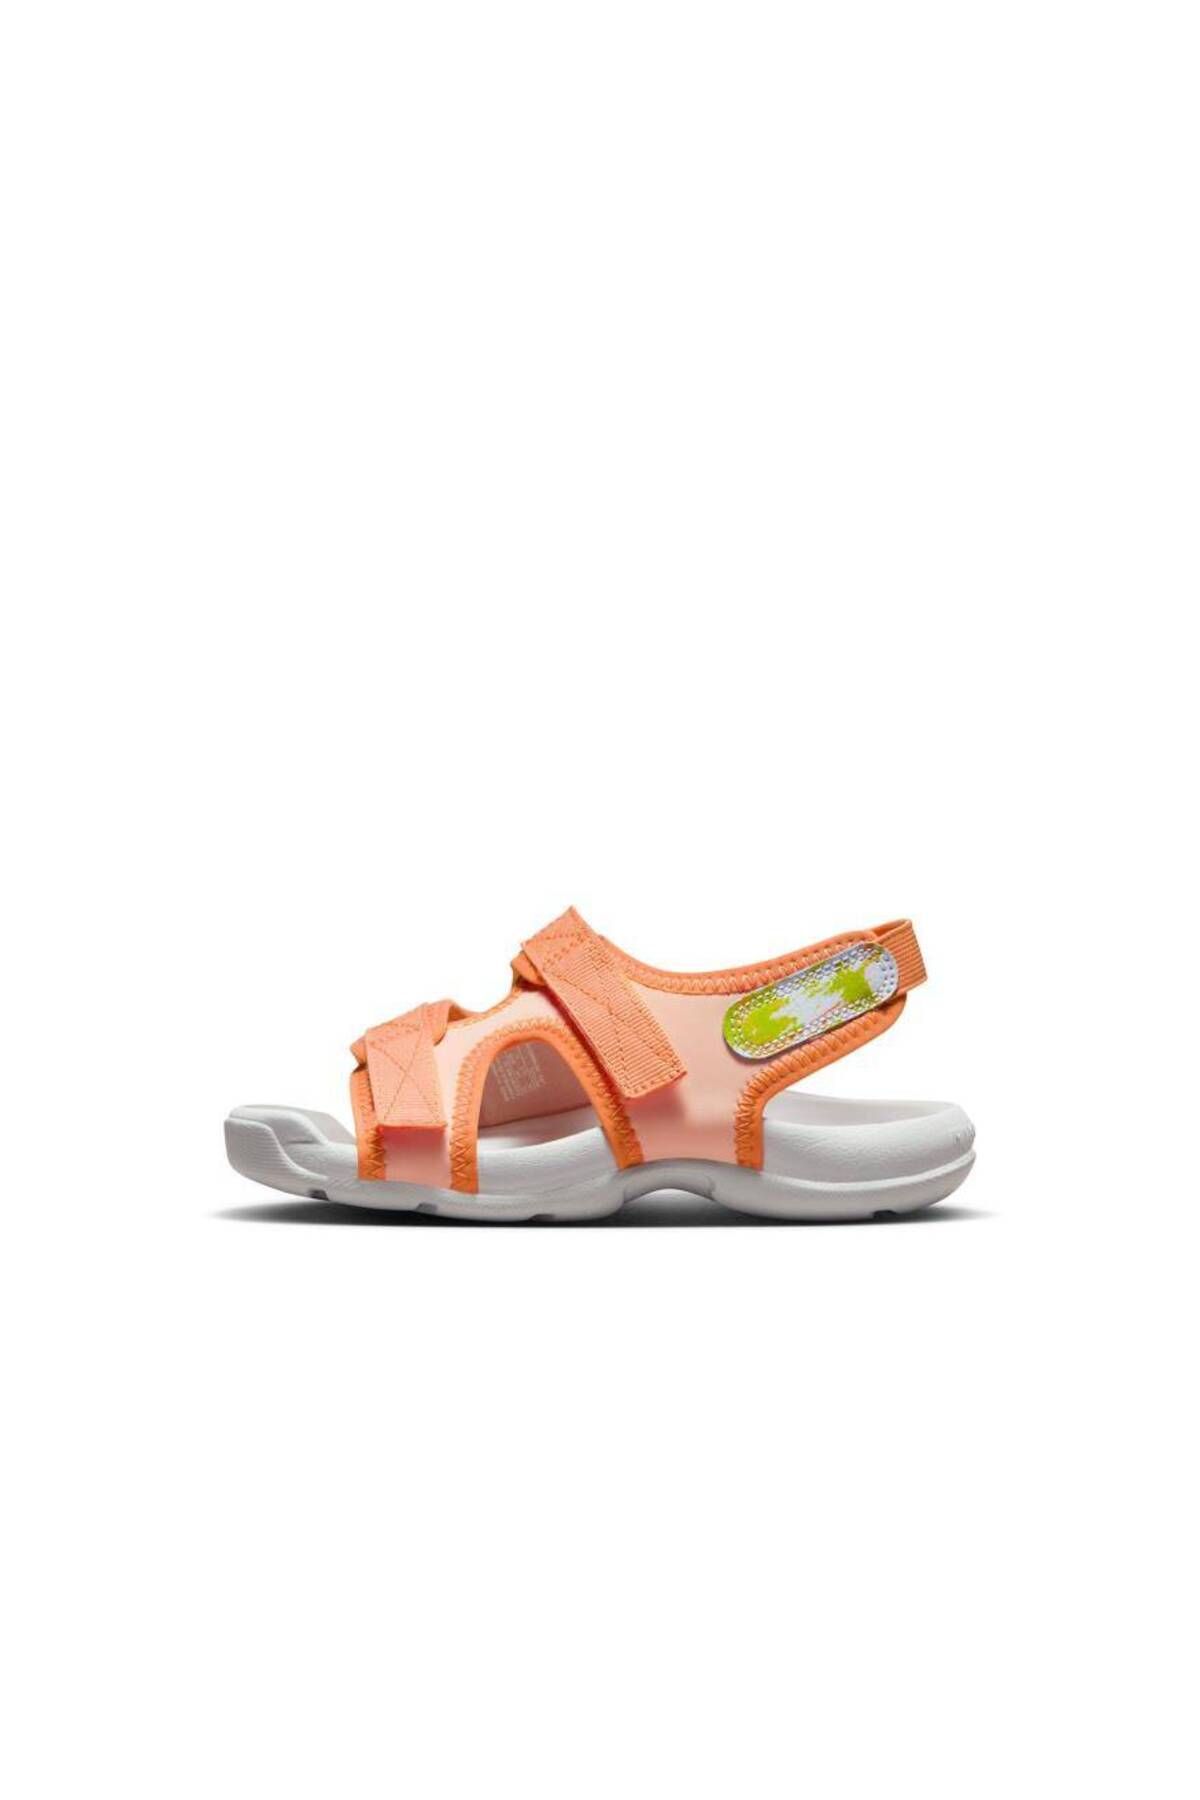 Nike Sunray تنظیم 6 SE PS Sandals's Sandals DX6385-800